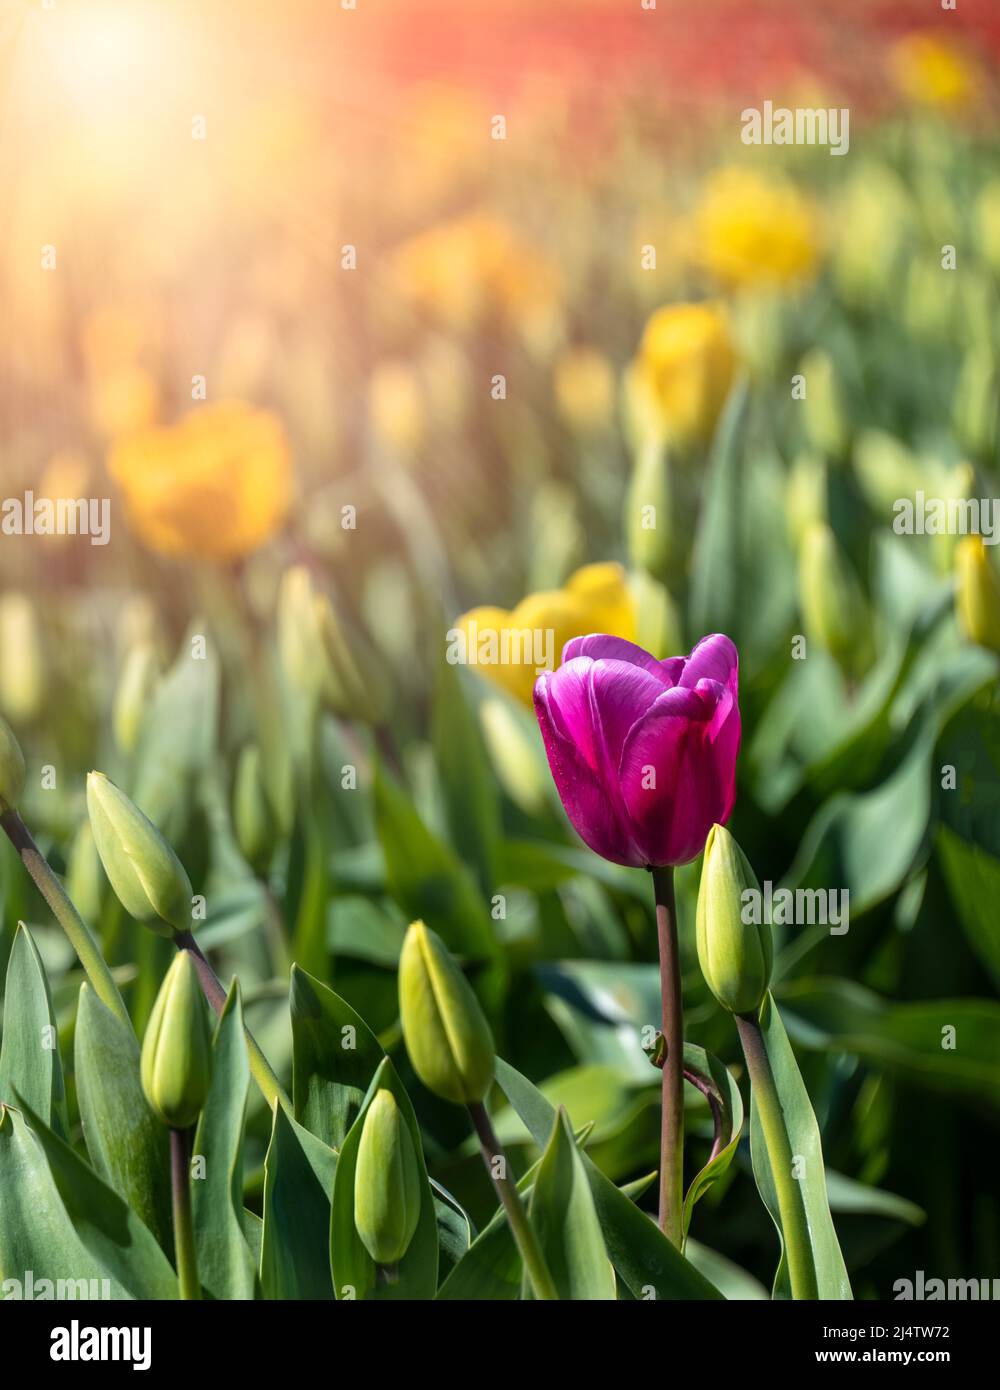 single purple tulip among yellow tulips with sunshine Stock Photo